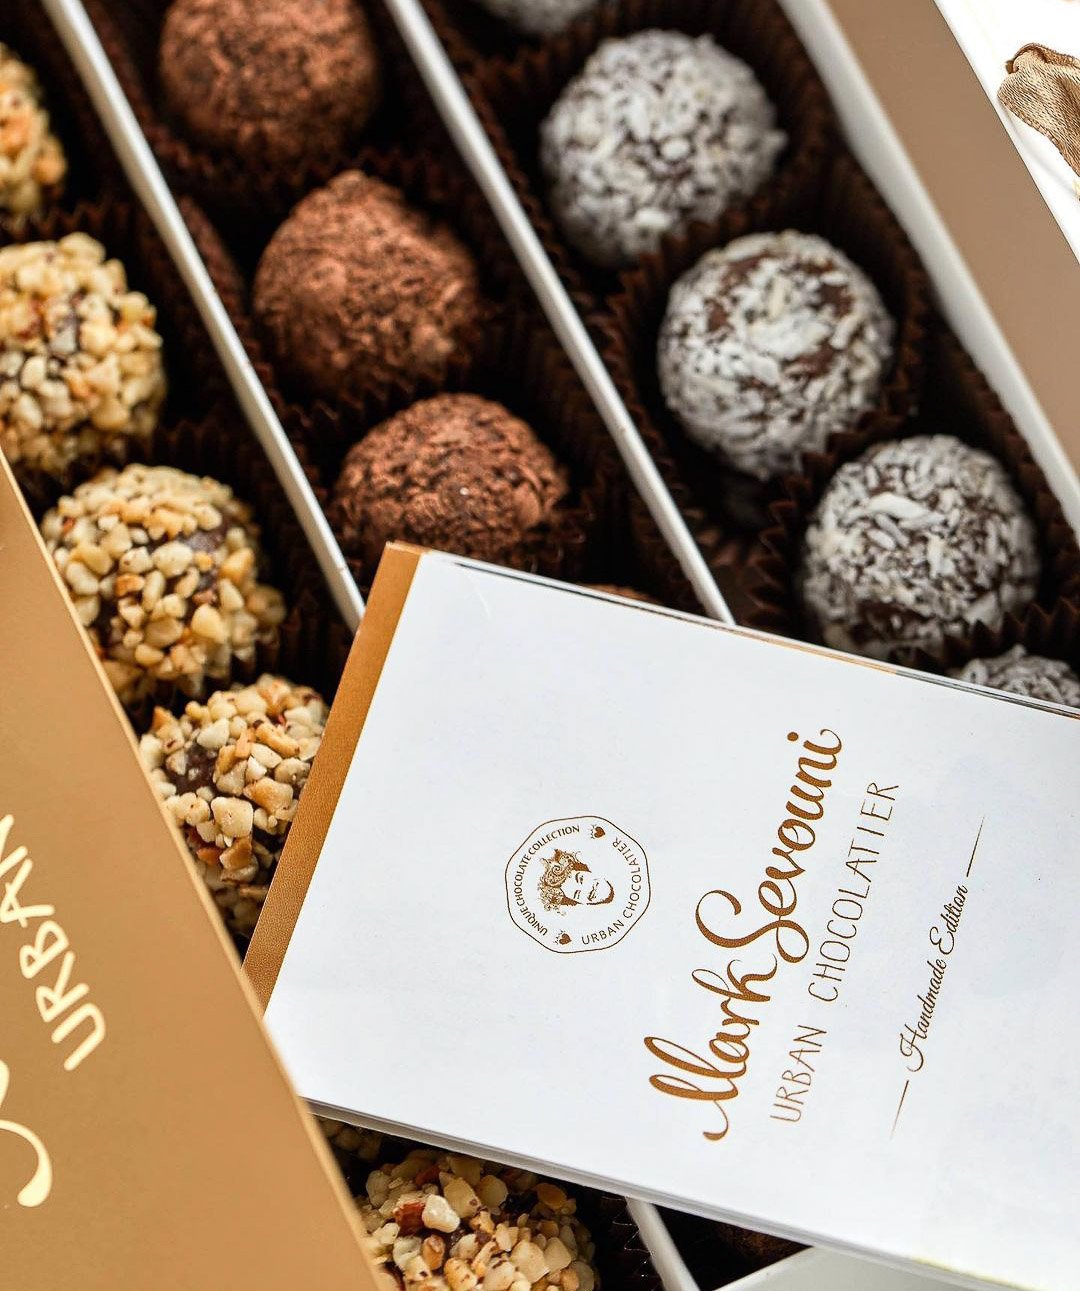 Шоколадная коллекция `Mark Sevouni` Avantgard Chocolate Collection 280 г